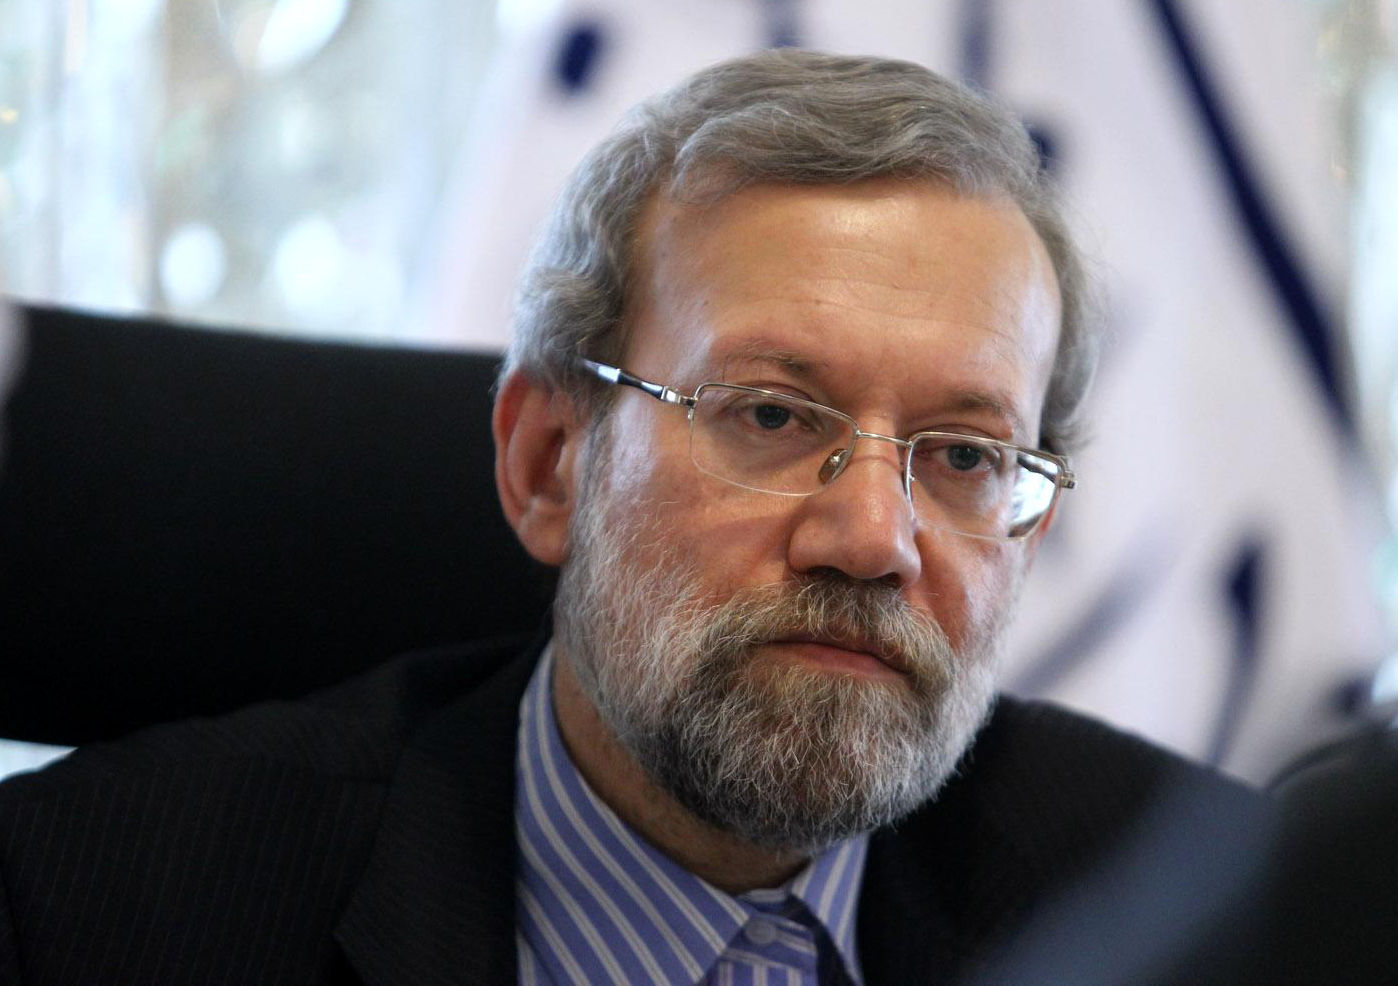 Iran parliament seeking to address manufacturers' problems: Speaker